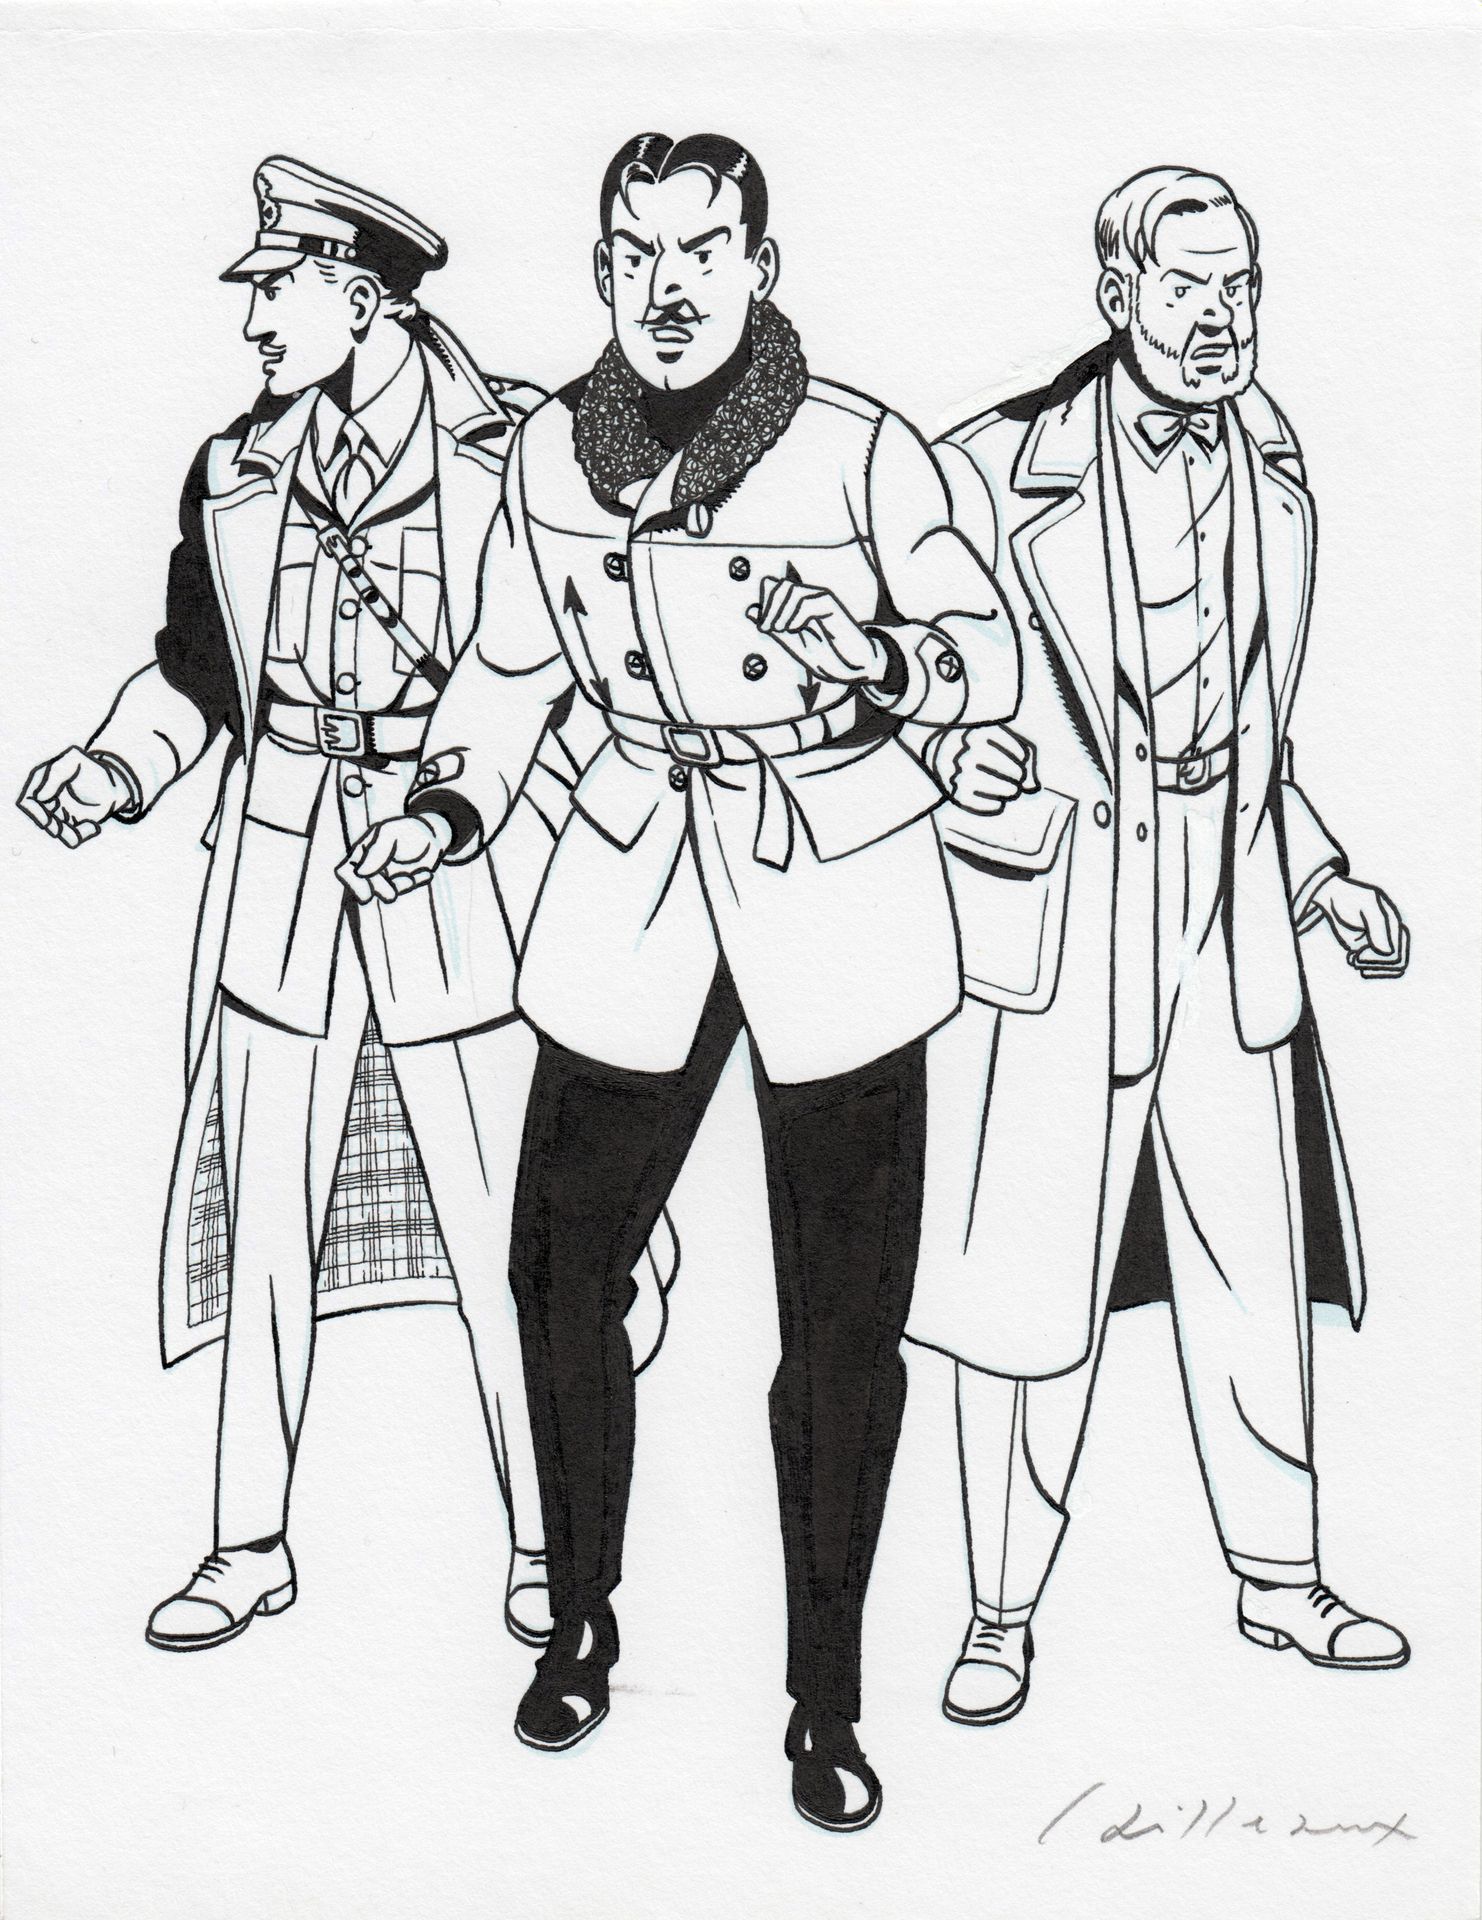 CAILLEAUX, Christian (1967) Abbildung Blake, Mortimer und Olrik (nach Jacobs).

&hellip;